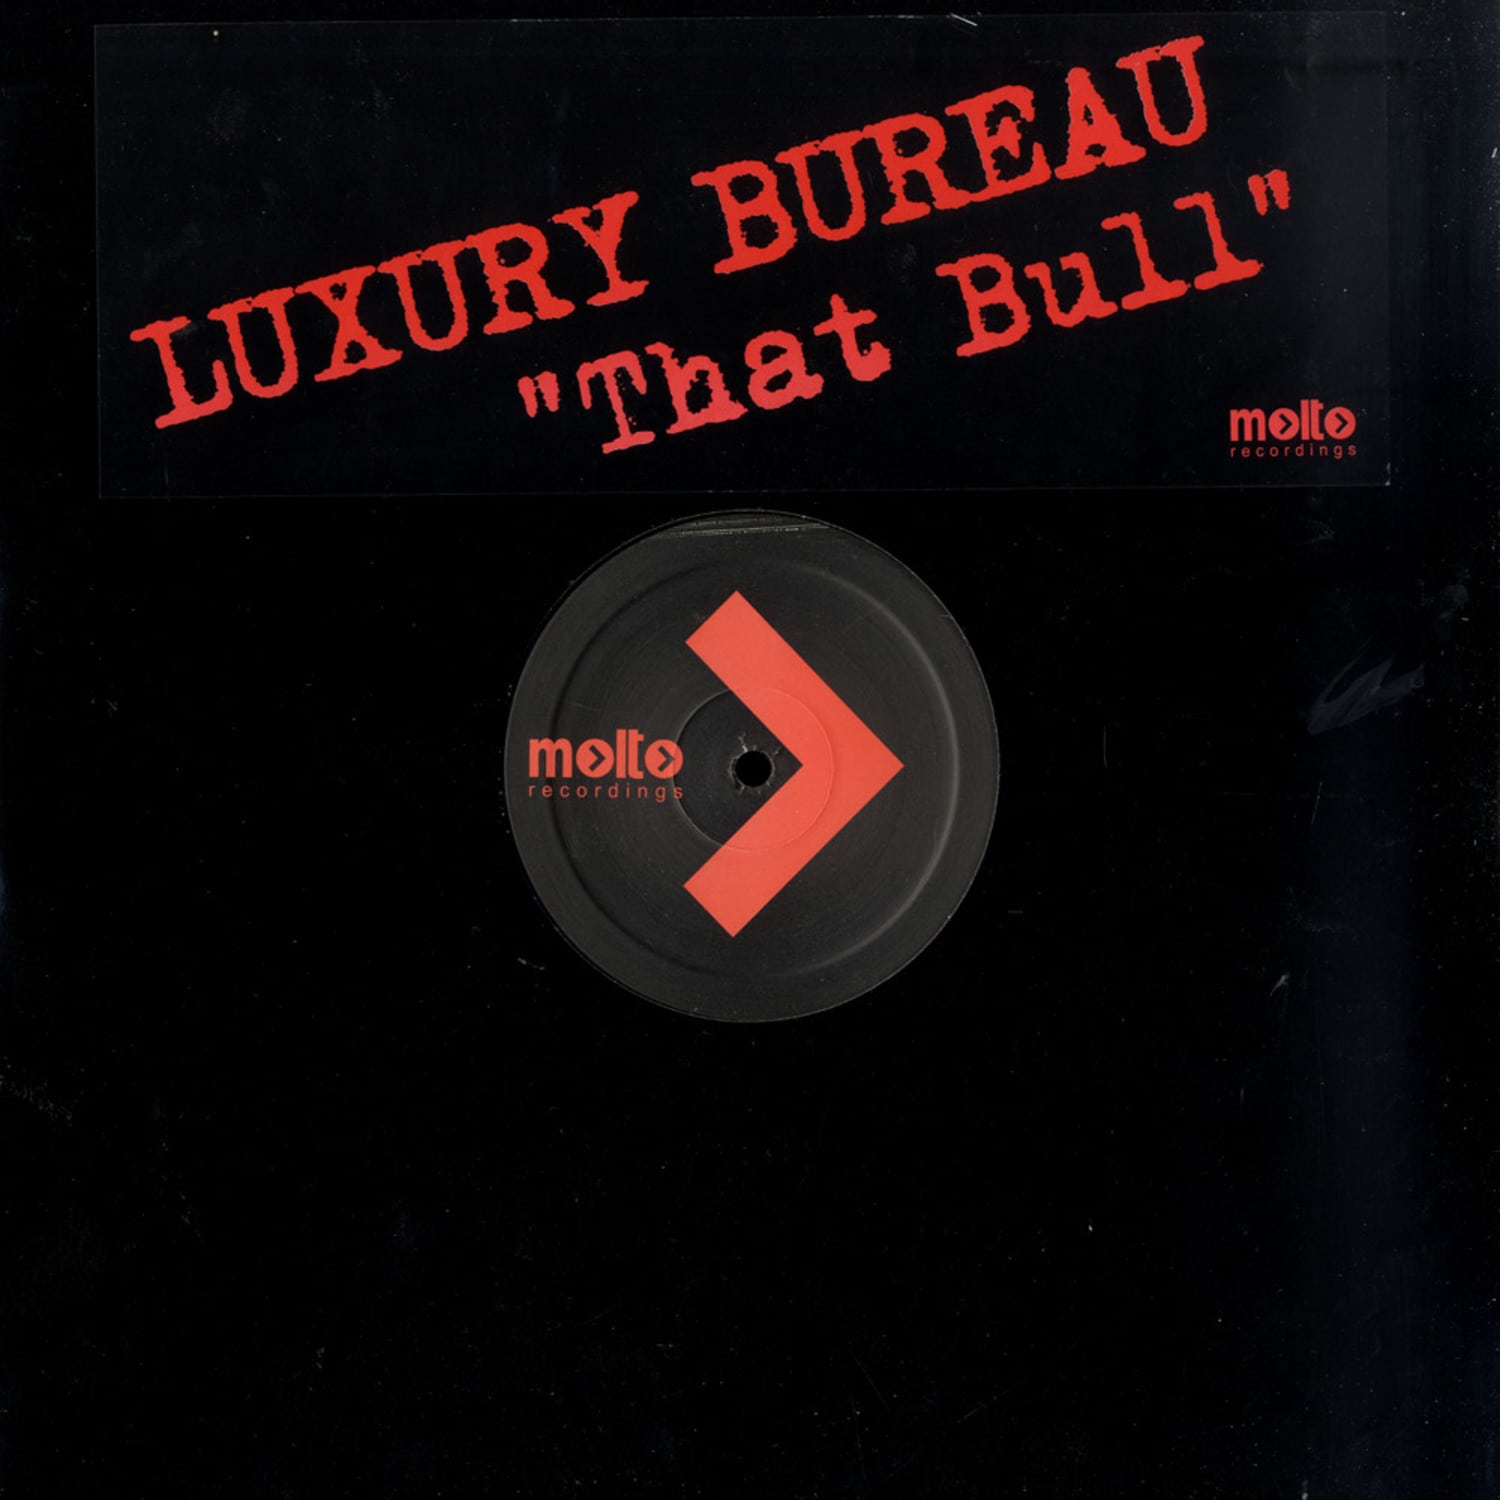 Luxury Bureau - THAT BULL